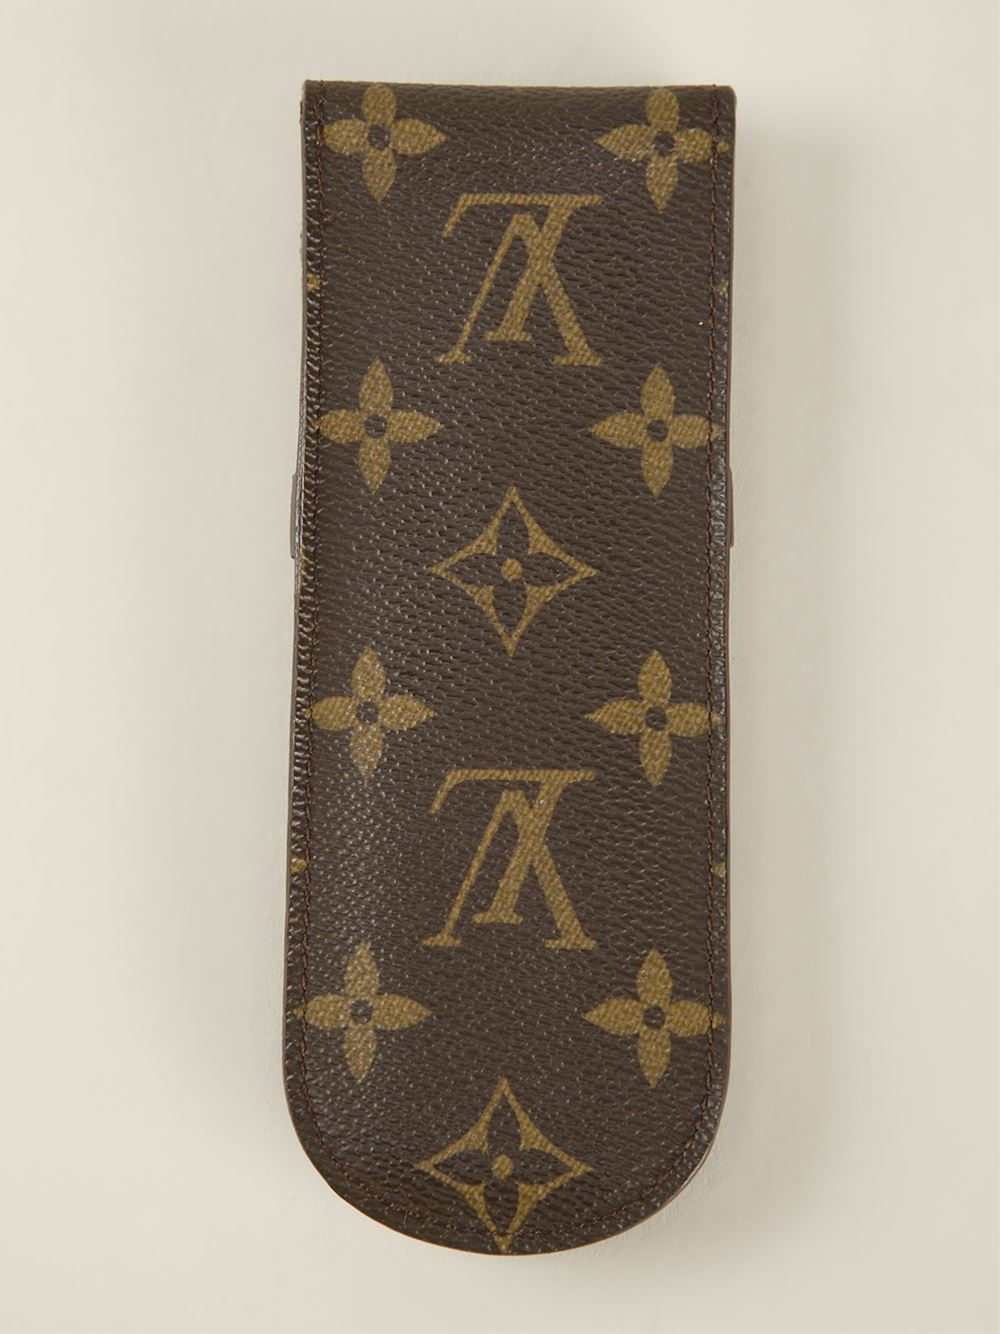 Lyst - Louis Vuitton Monogram Pen Case in Brown